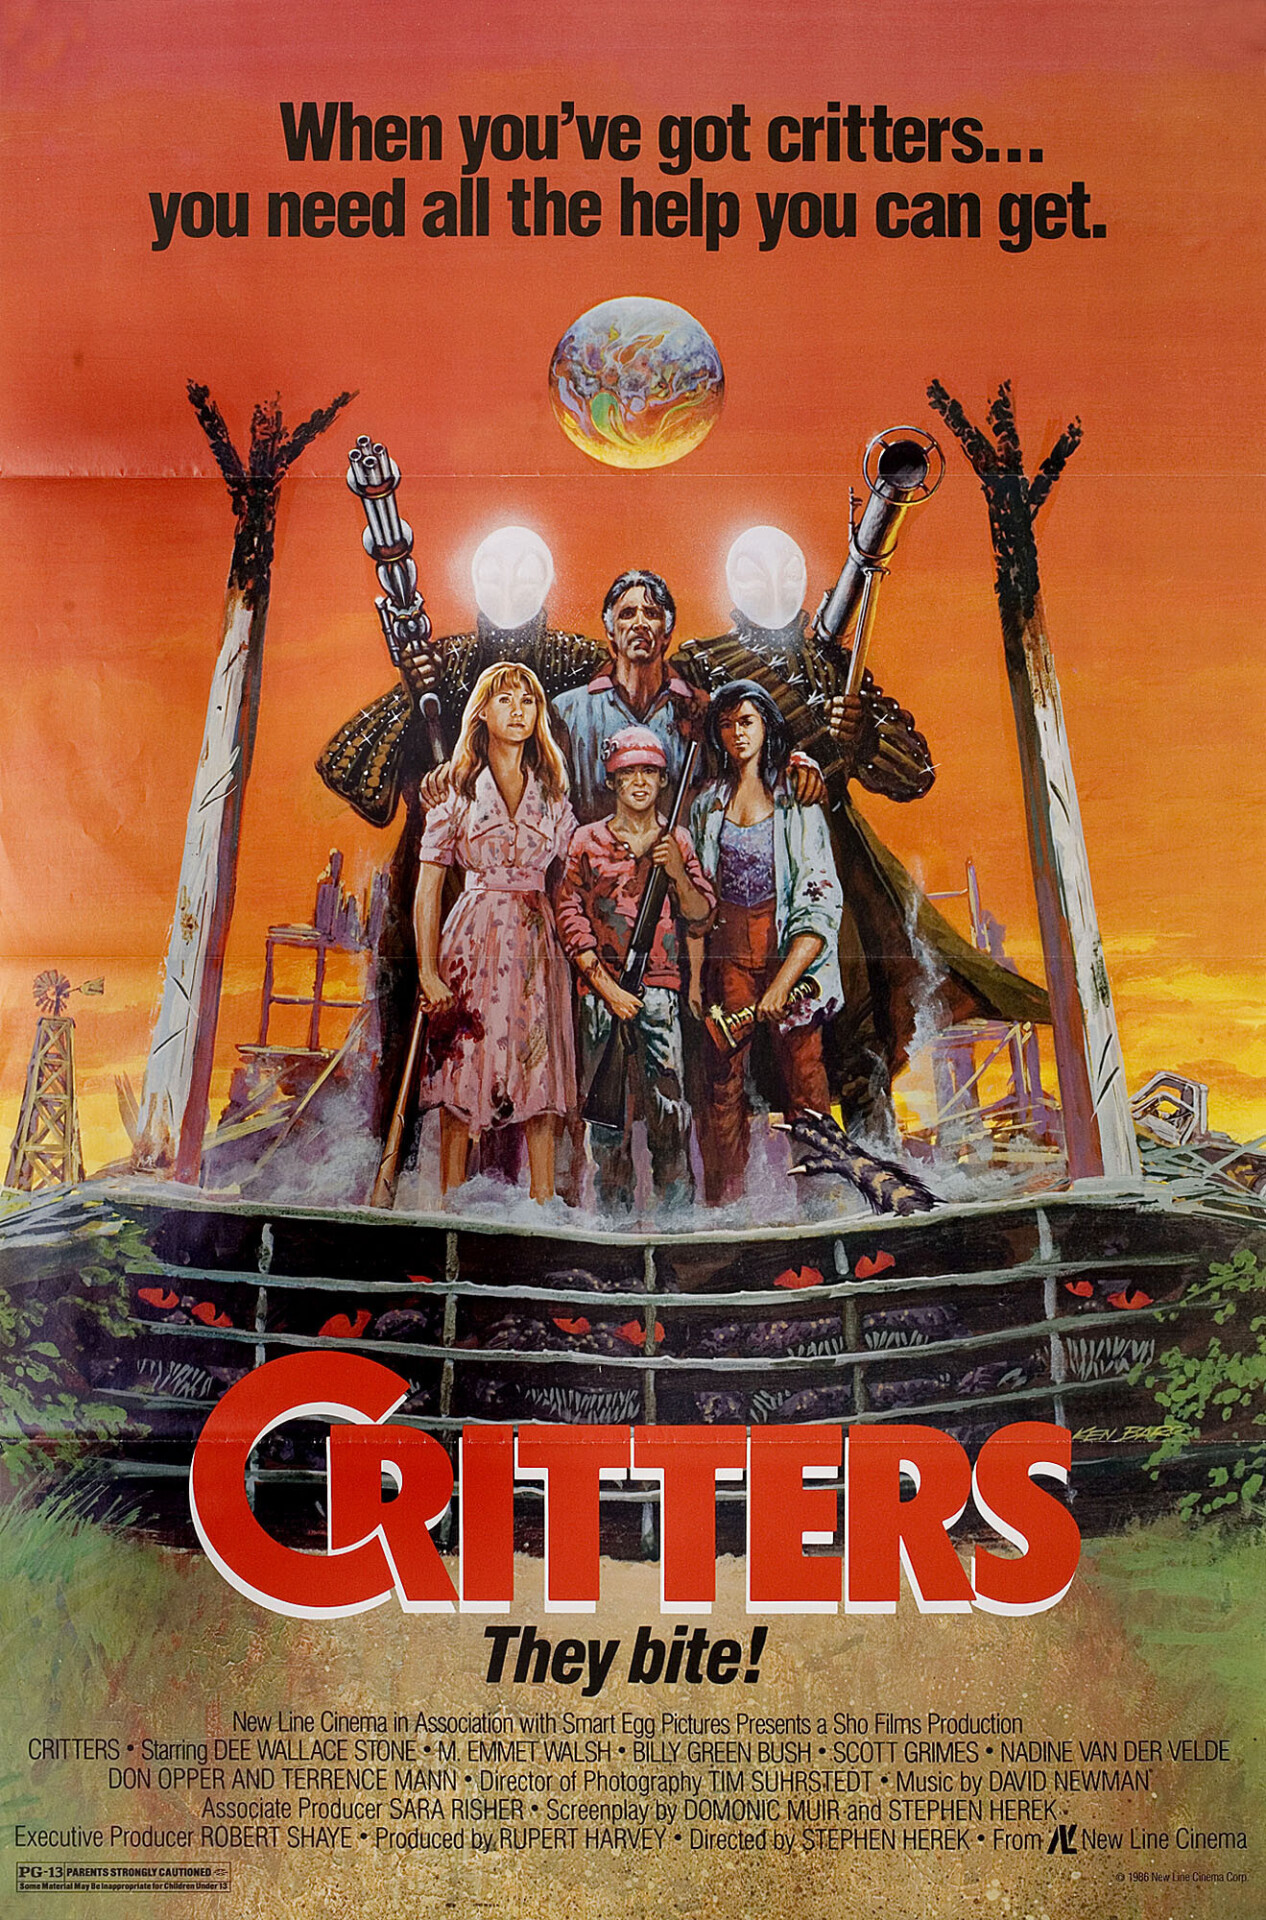 Зубастики (Critters, 1986), режиссёр Стивен Херек, американский постер к фильму, автор Кен Барр (ужасы, 1986 год)